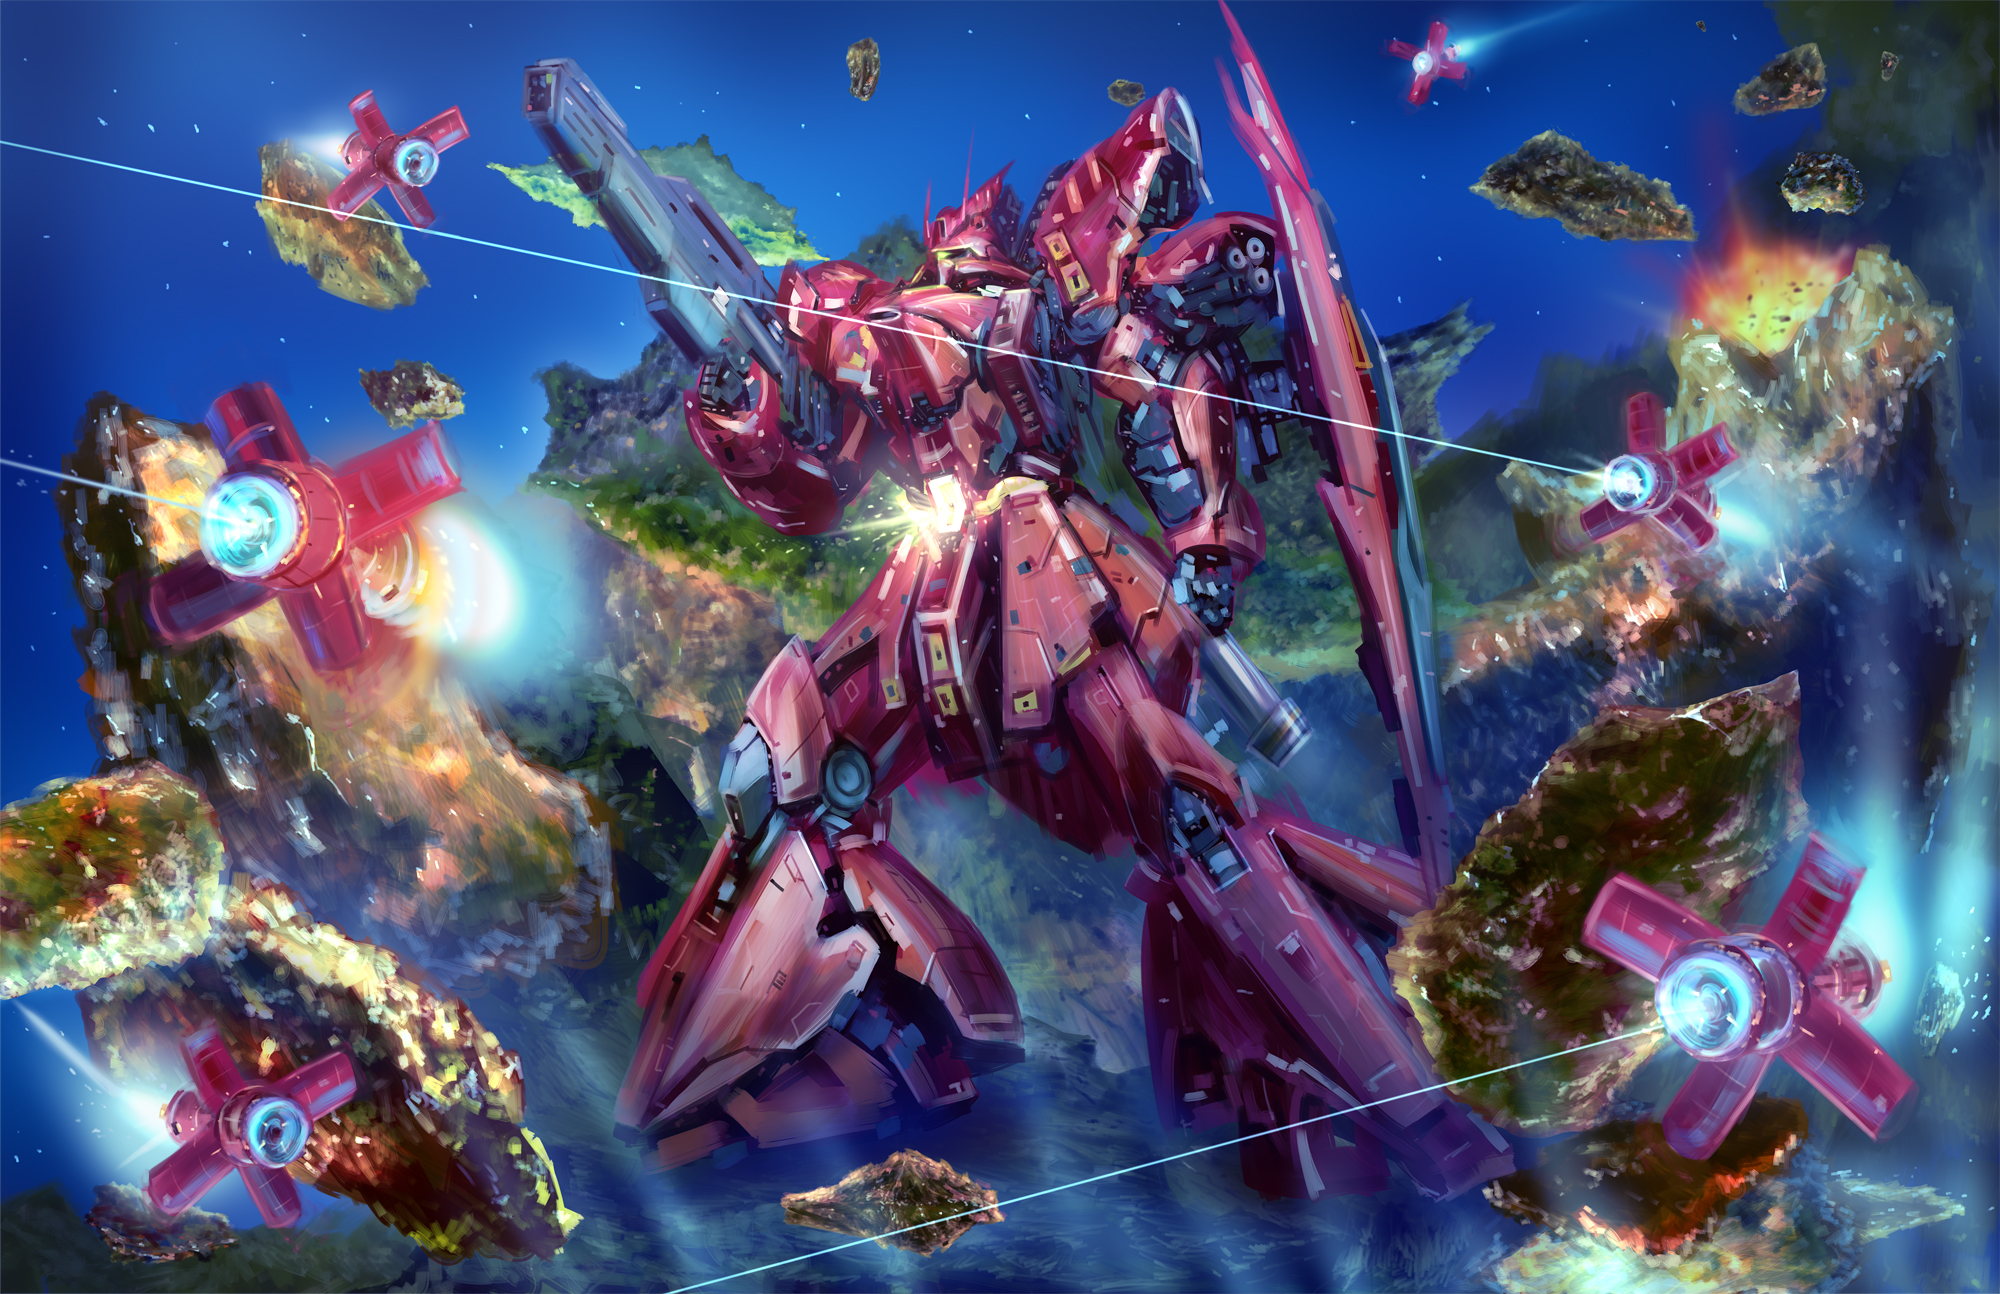 Anime 2000x1294 anime mechs Mobile Suit Mobile Suit Gundam Char&#039;s Counterattack Sazabi Super Robot Taisen artwork digital art fan art